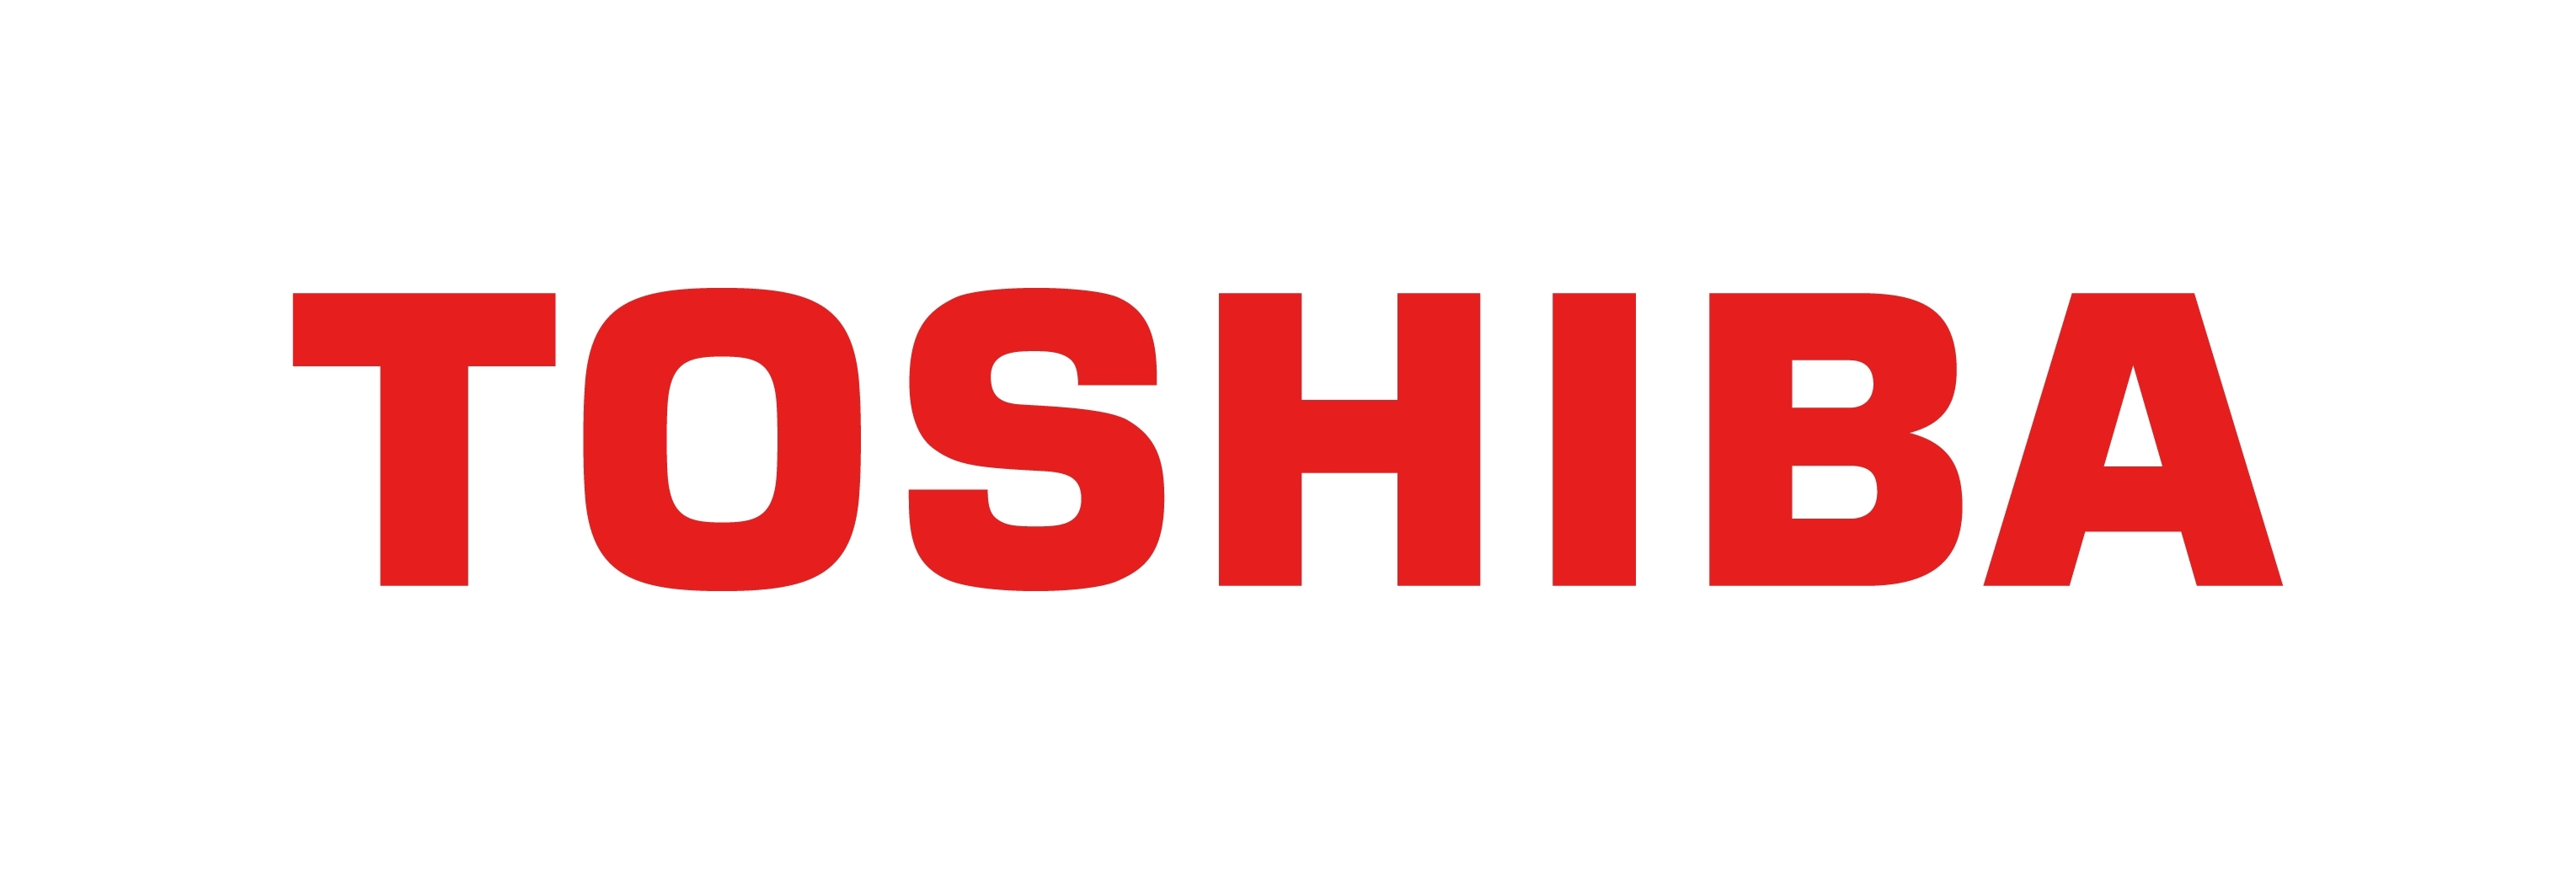 https://mms.businesswire.com/media/20210624005277/en/887195/5/Toshiba_Logo_Red_RGB.jpg 